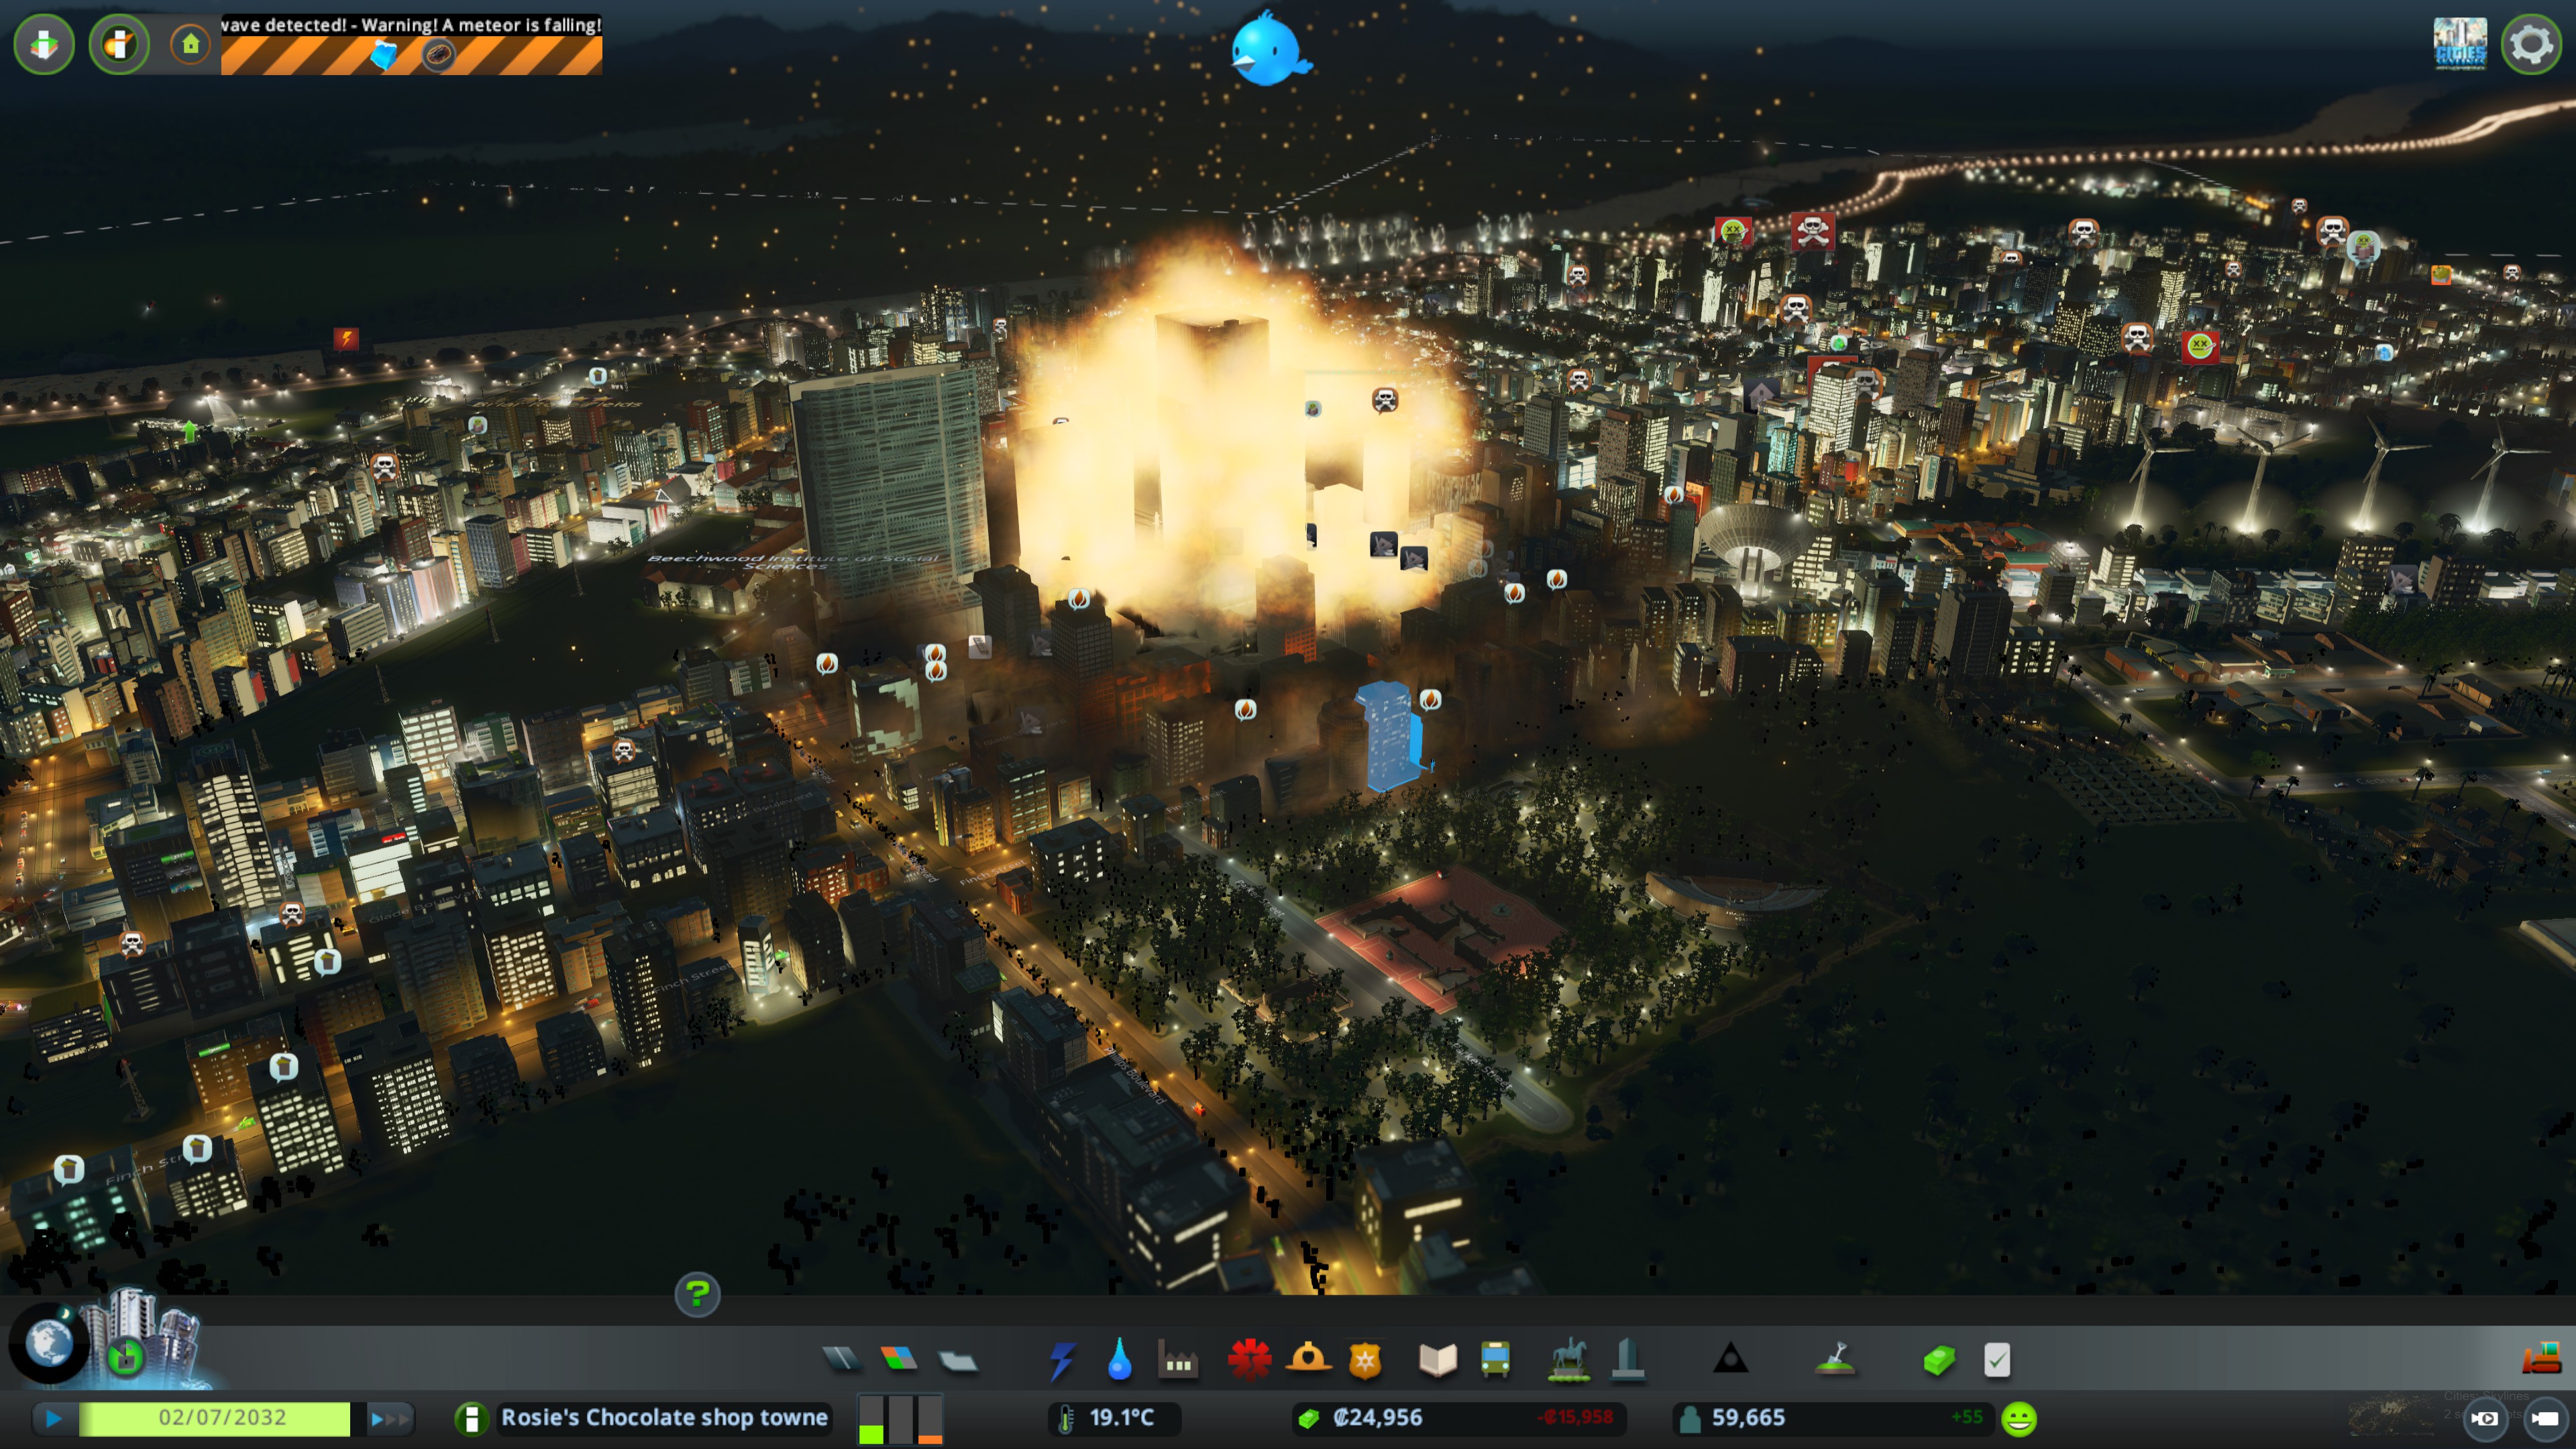 tsunami strikes in cities skylines